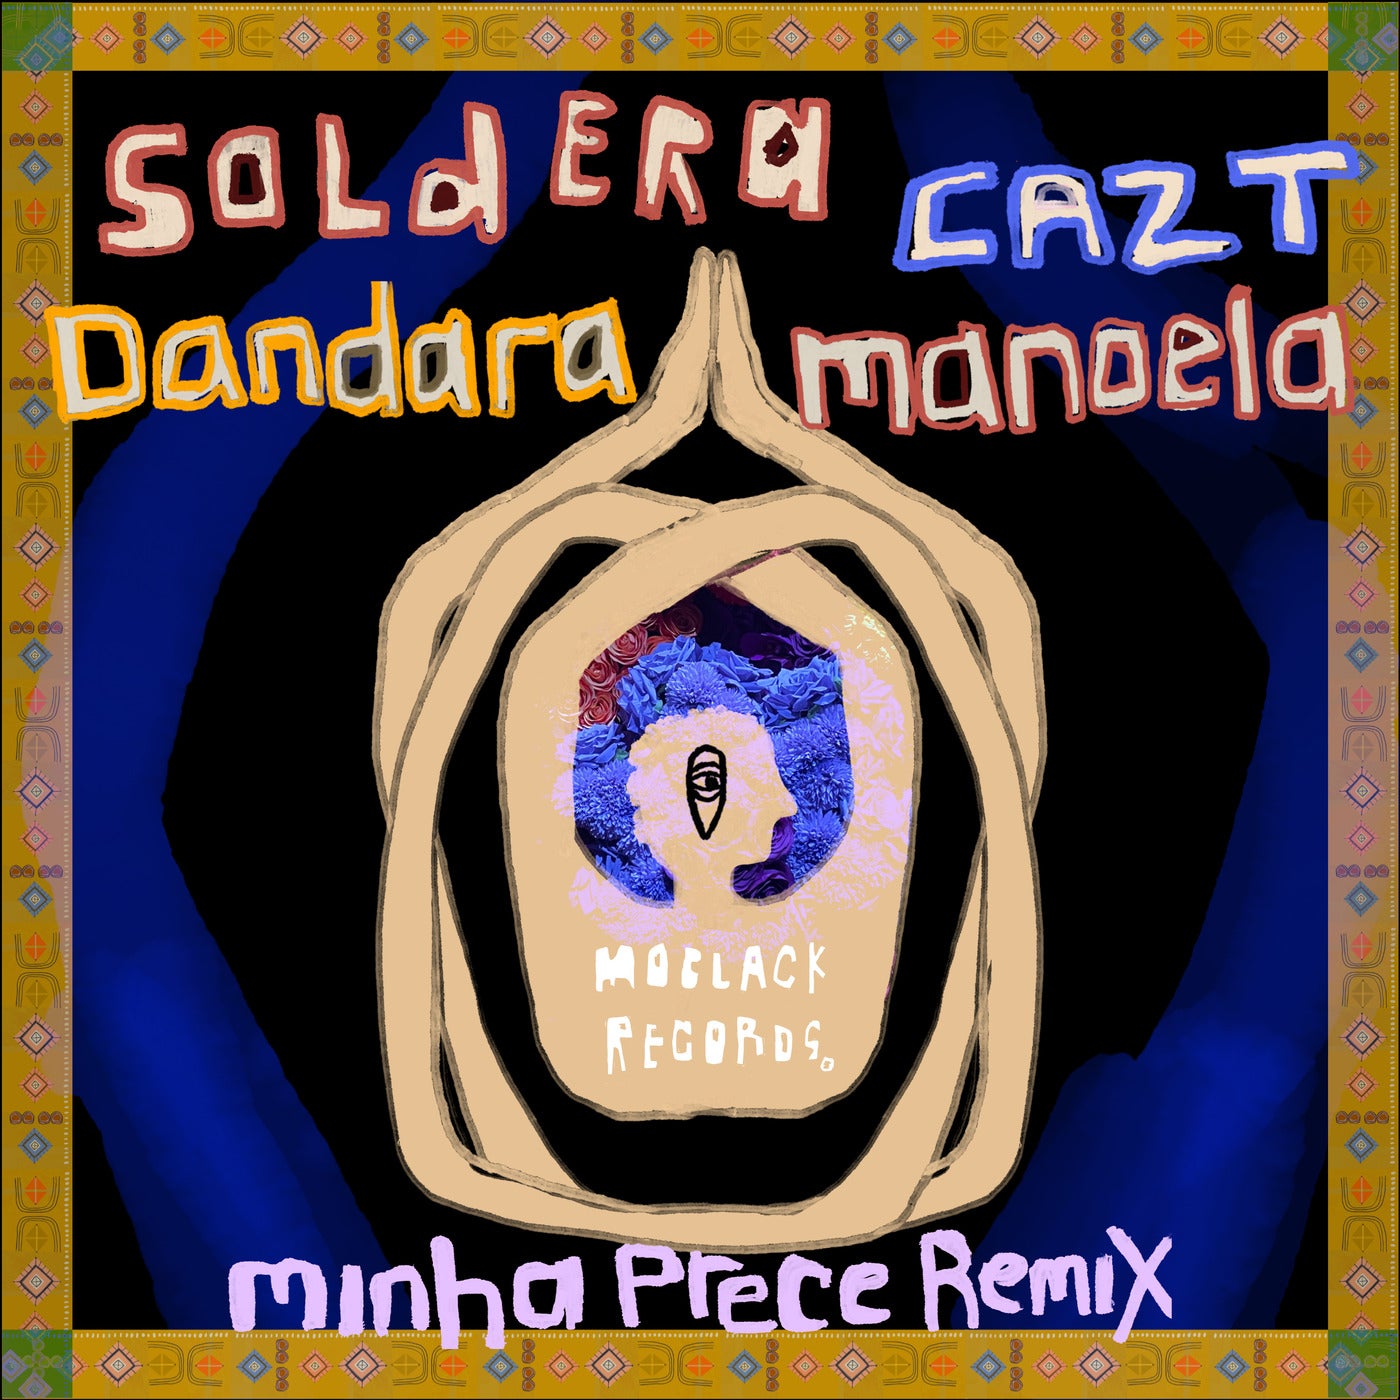 image cover: Soldera, Cazt, Dandara Manoela - Minha Prece Remix on MoBlack Records